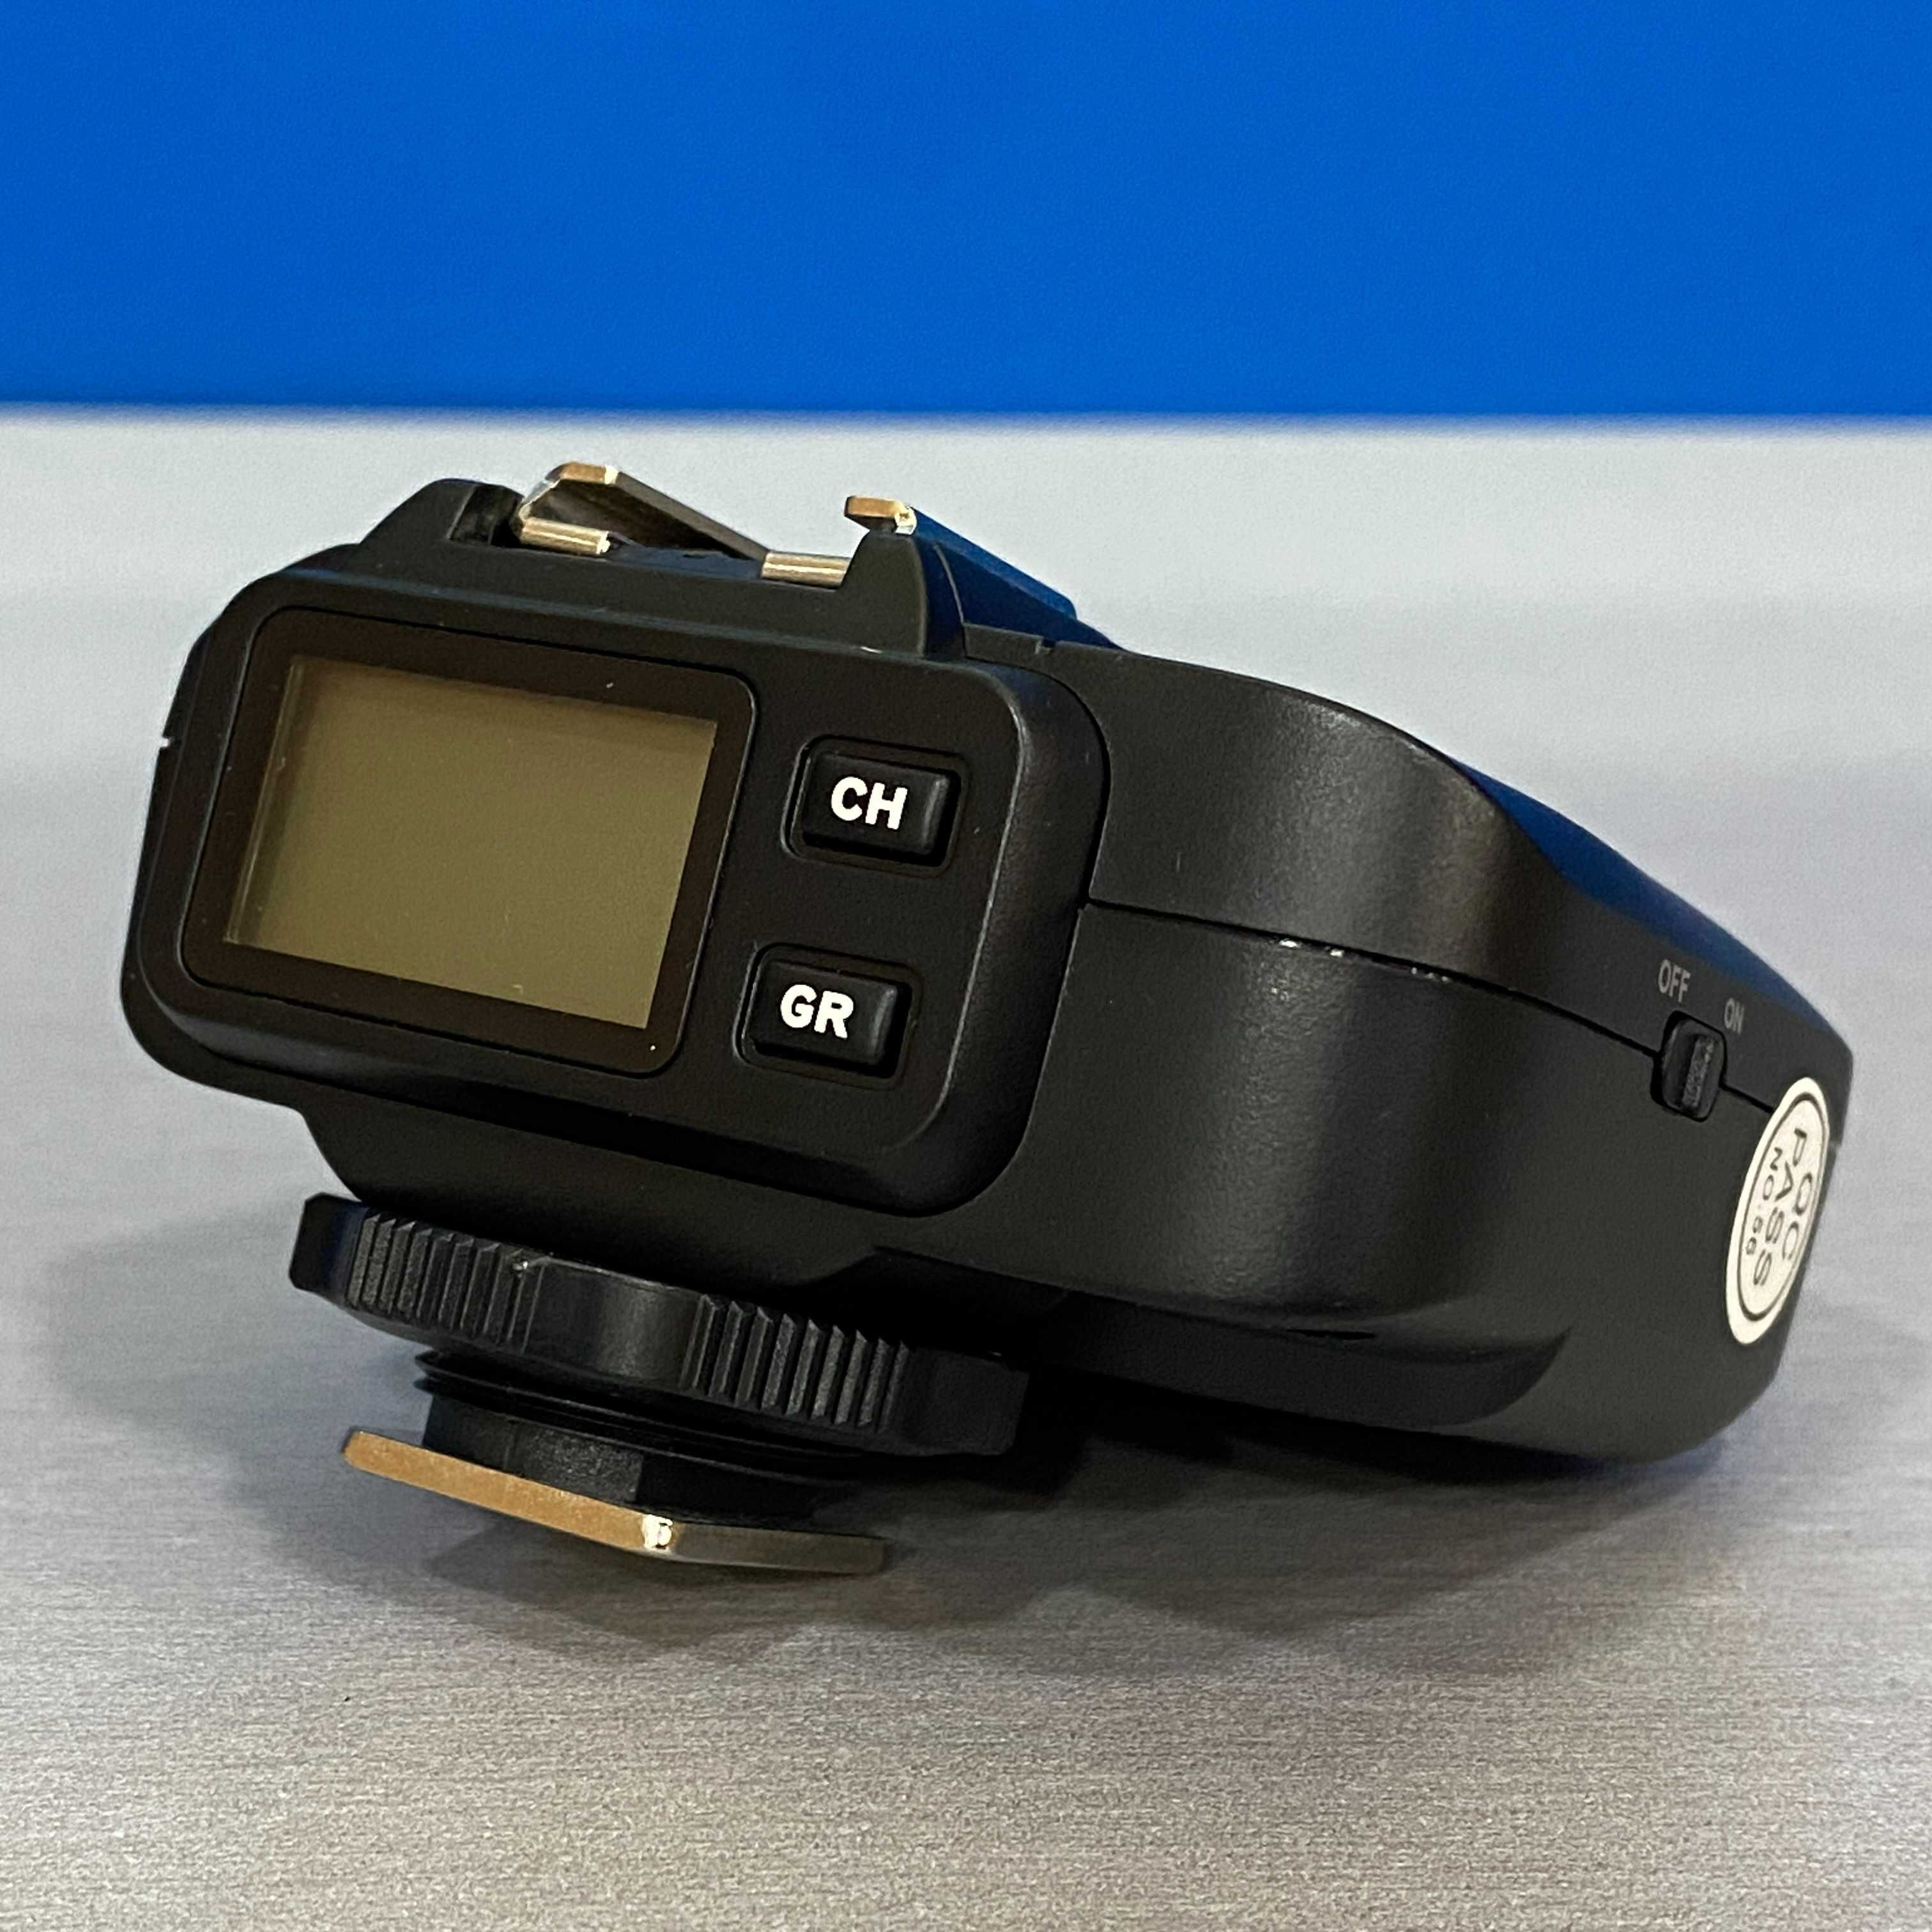 Godox X1R-C TTL Wireless Flash Trigger (Canon)